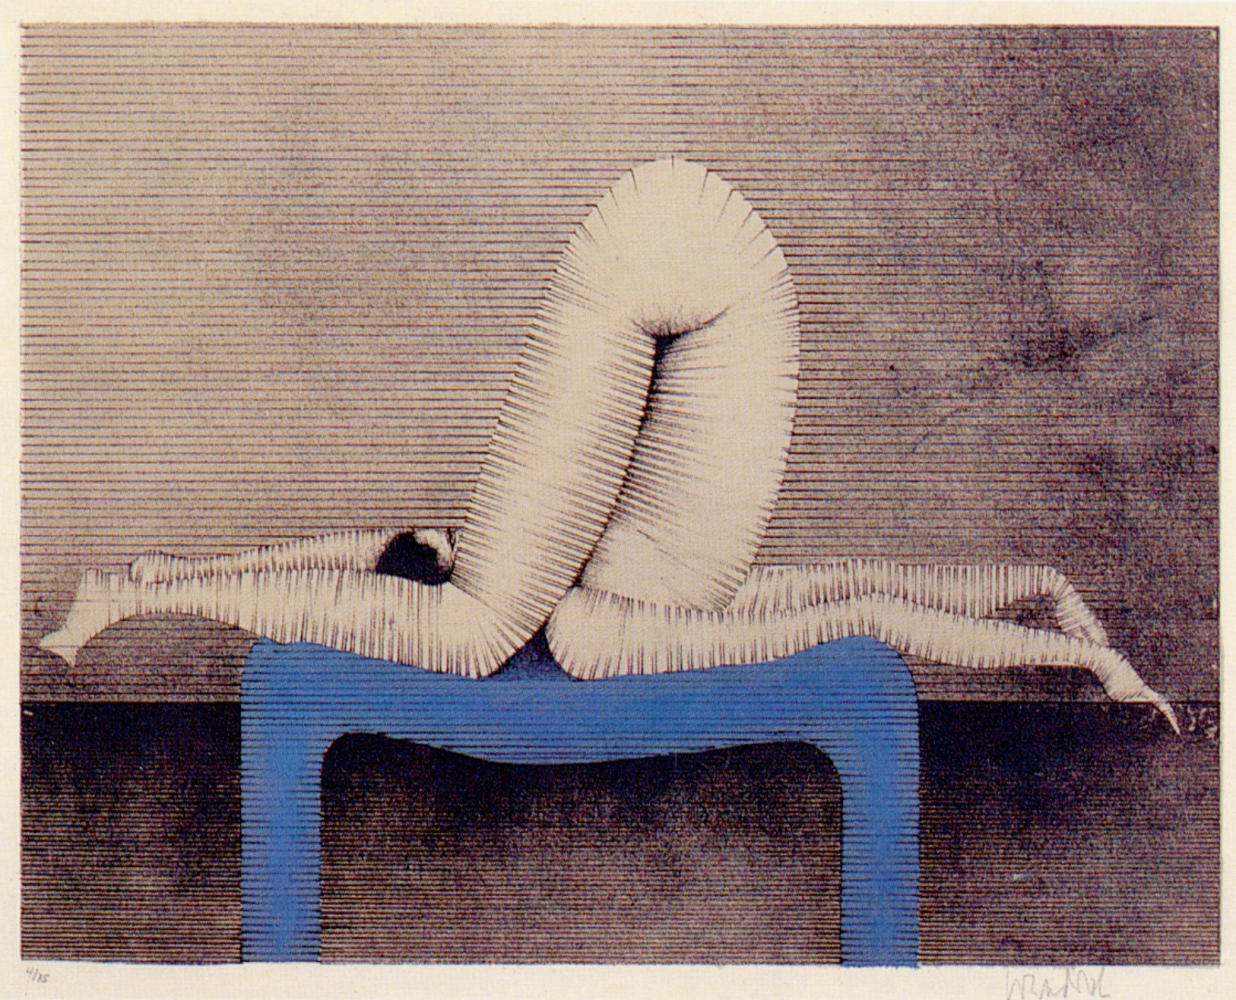 Paul Wunderlich (1927&amp;ndash;2010)

Position A, 1967

Color lithograph

16 1/4 x 21 in. (41.28 x 53.34 cm)&amp;nbsp;

&amp;nbsp;